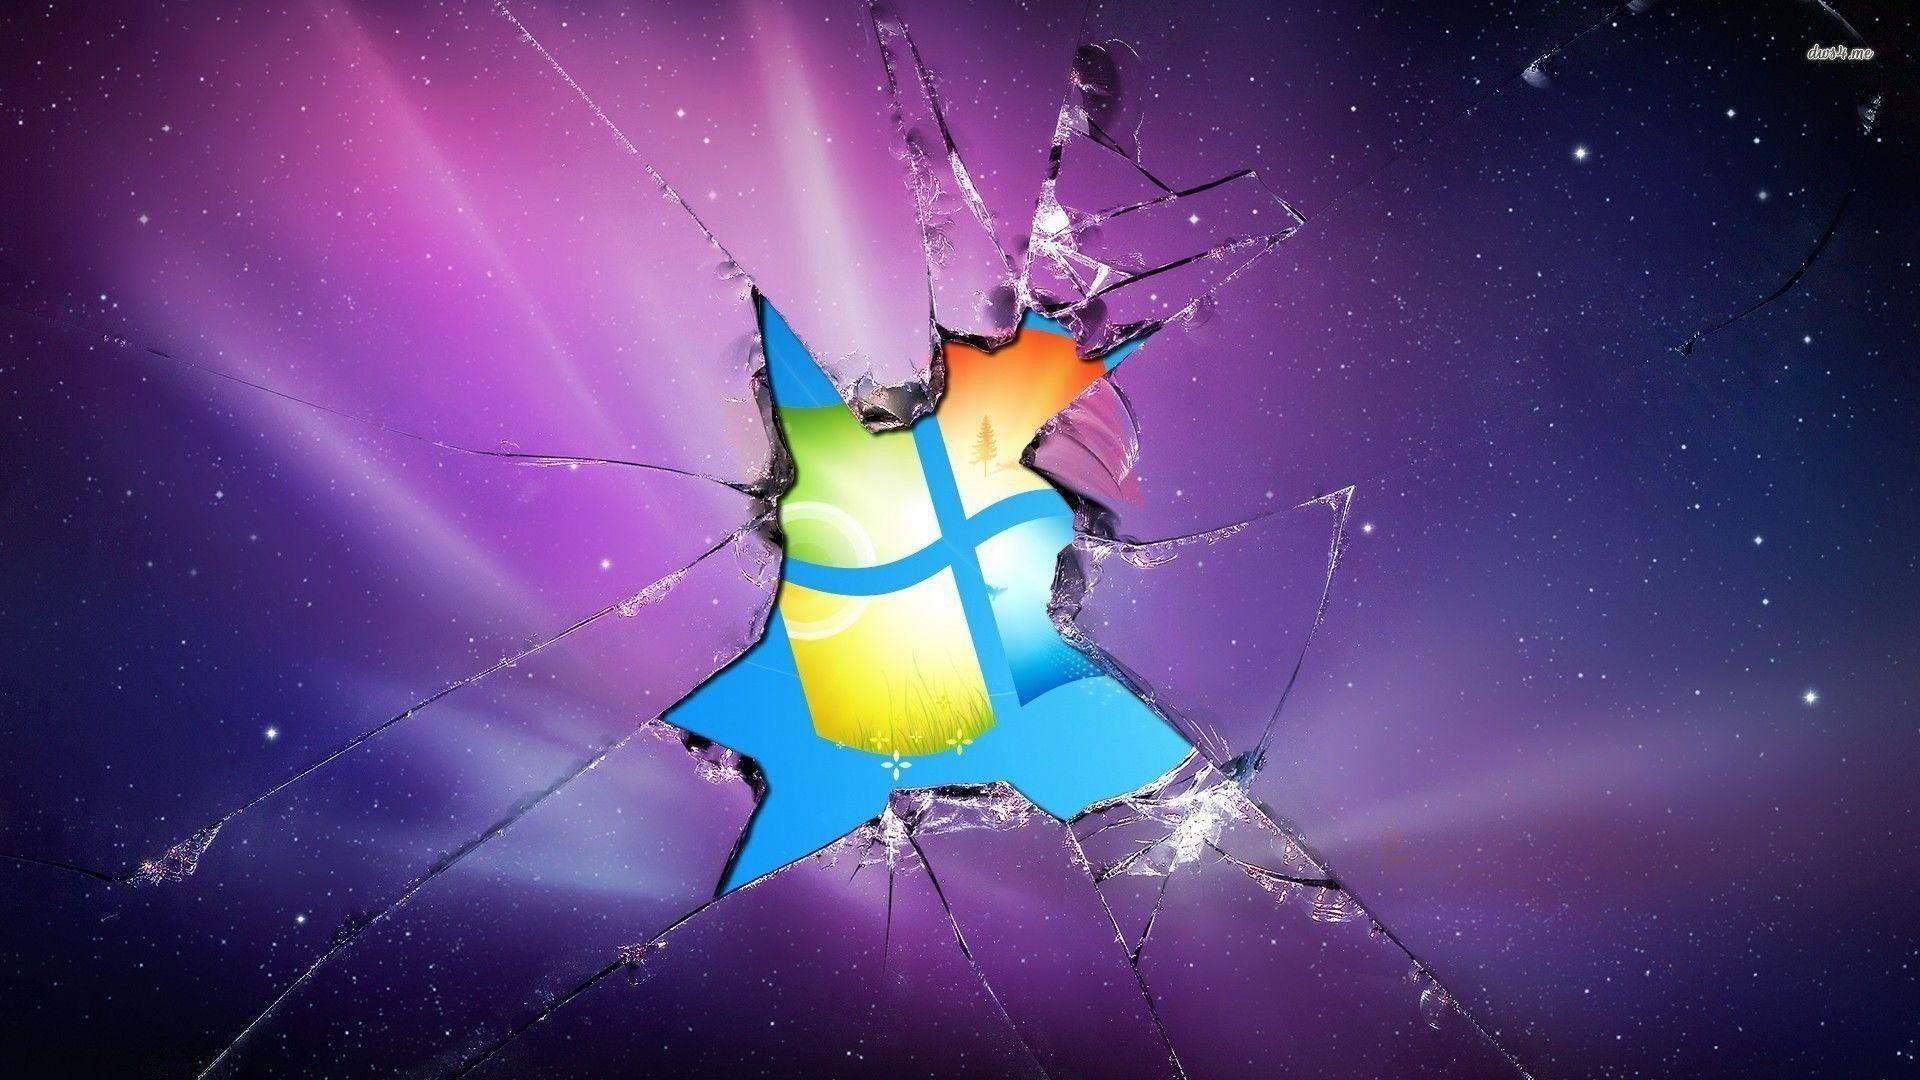 Broken Windows 7 Wallpaper